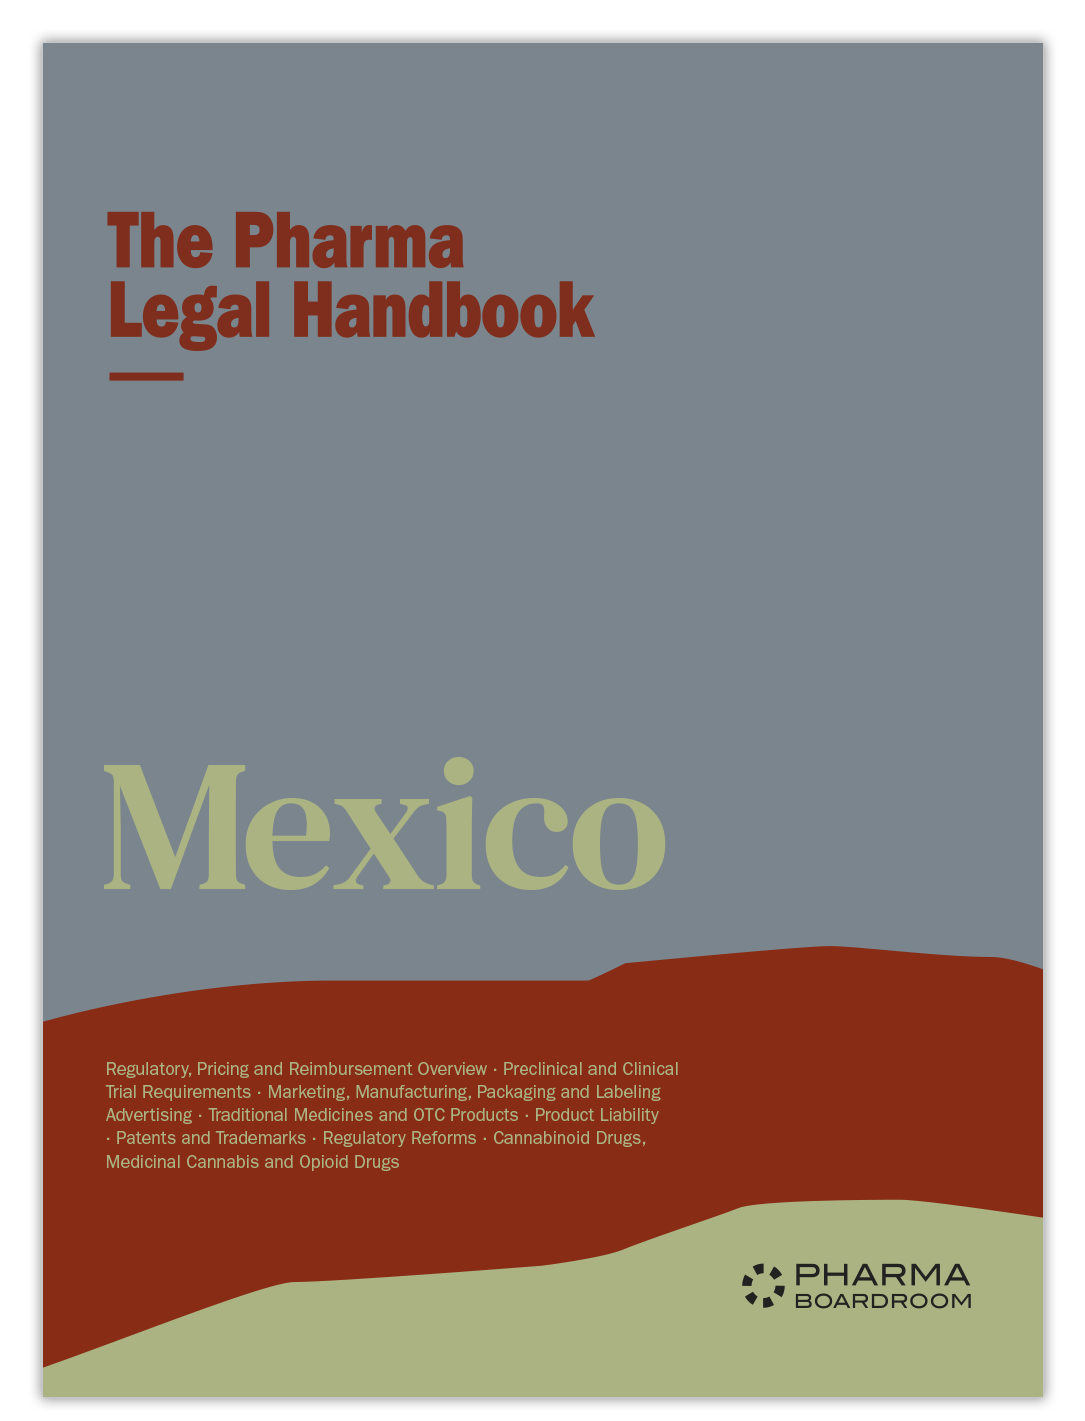 The Pharma Legal Handbook: Mexico